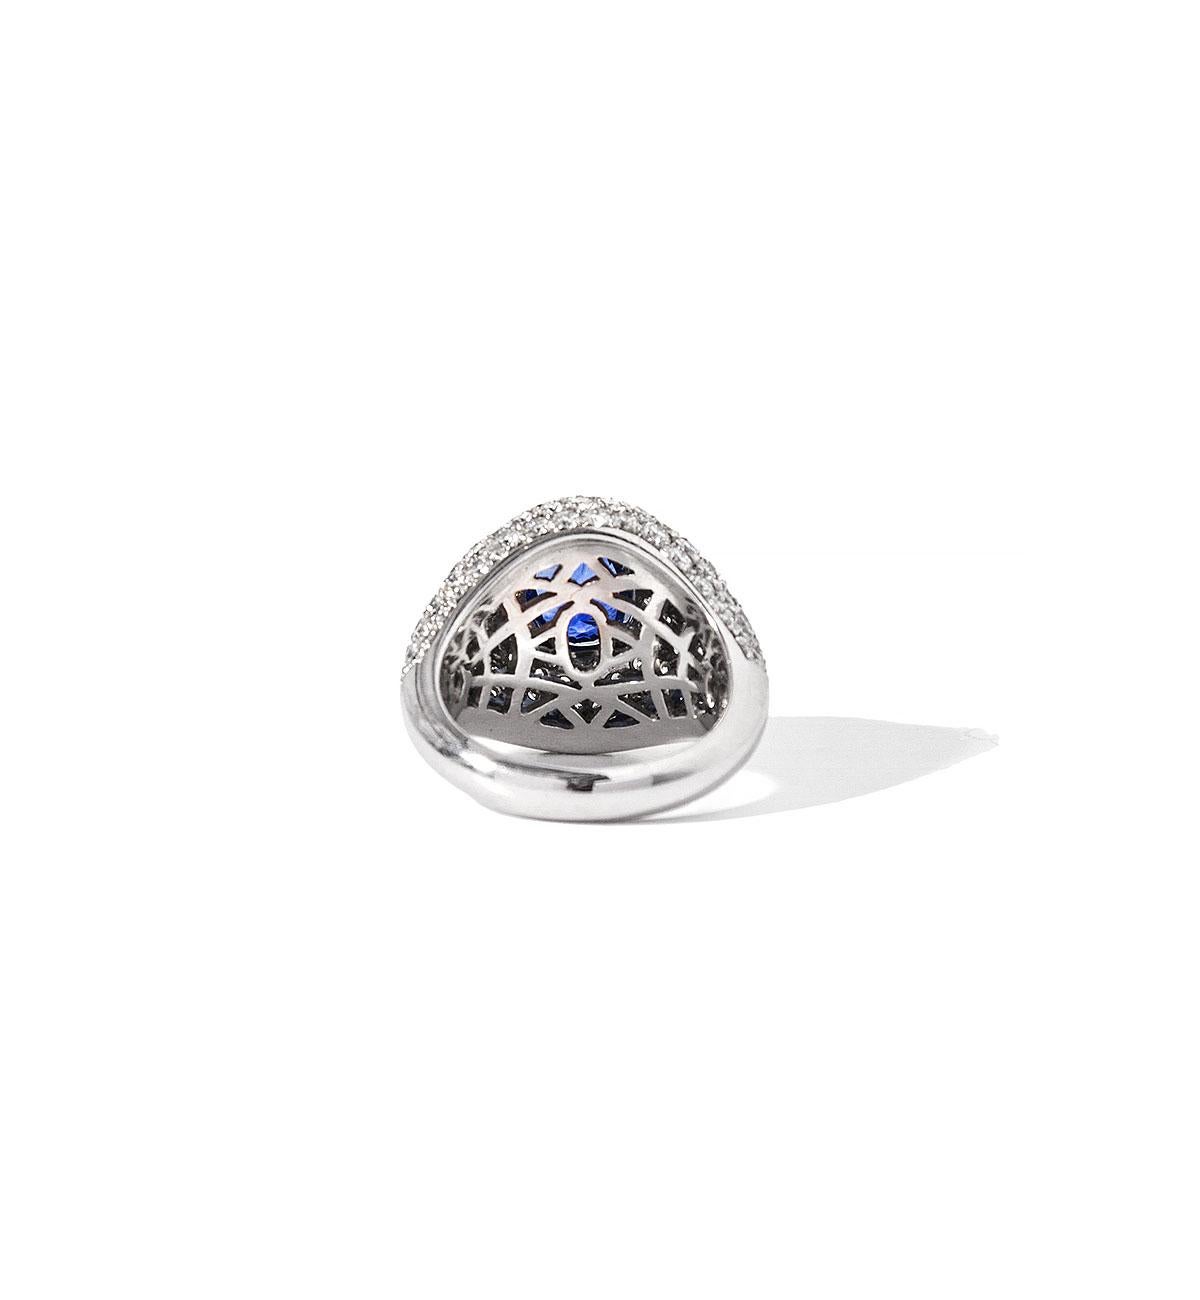 Oval Cut 3.63 Carat Sapphire with 3.10 Carat Diamond Cluster Ring